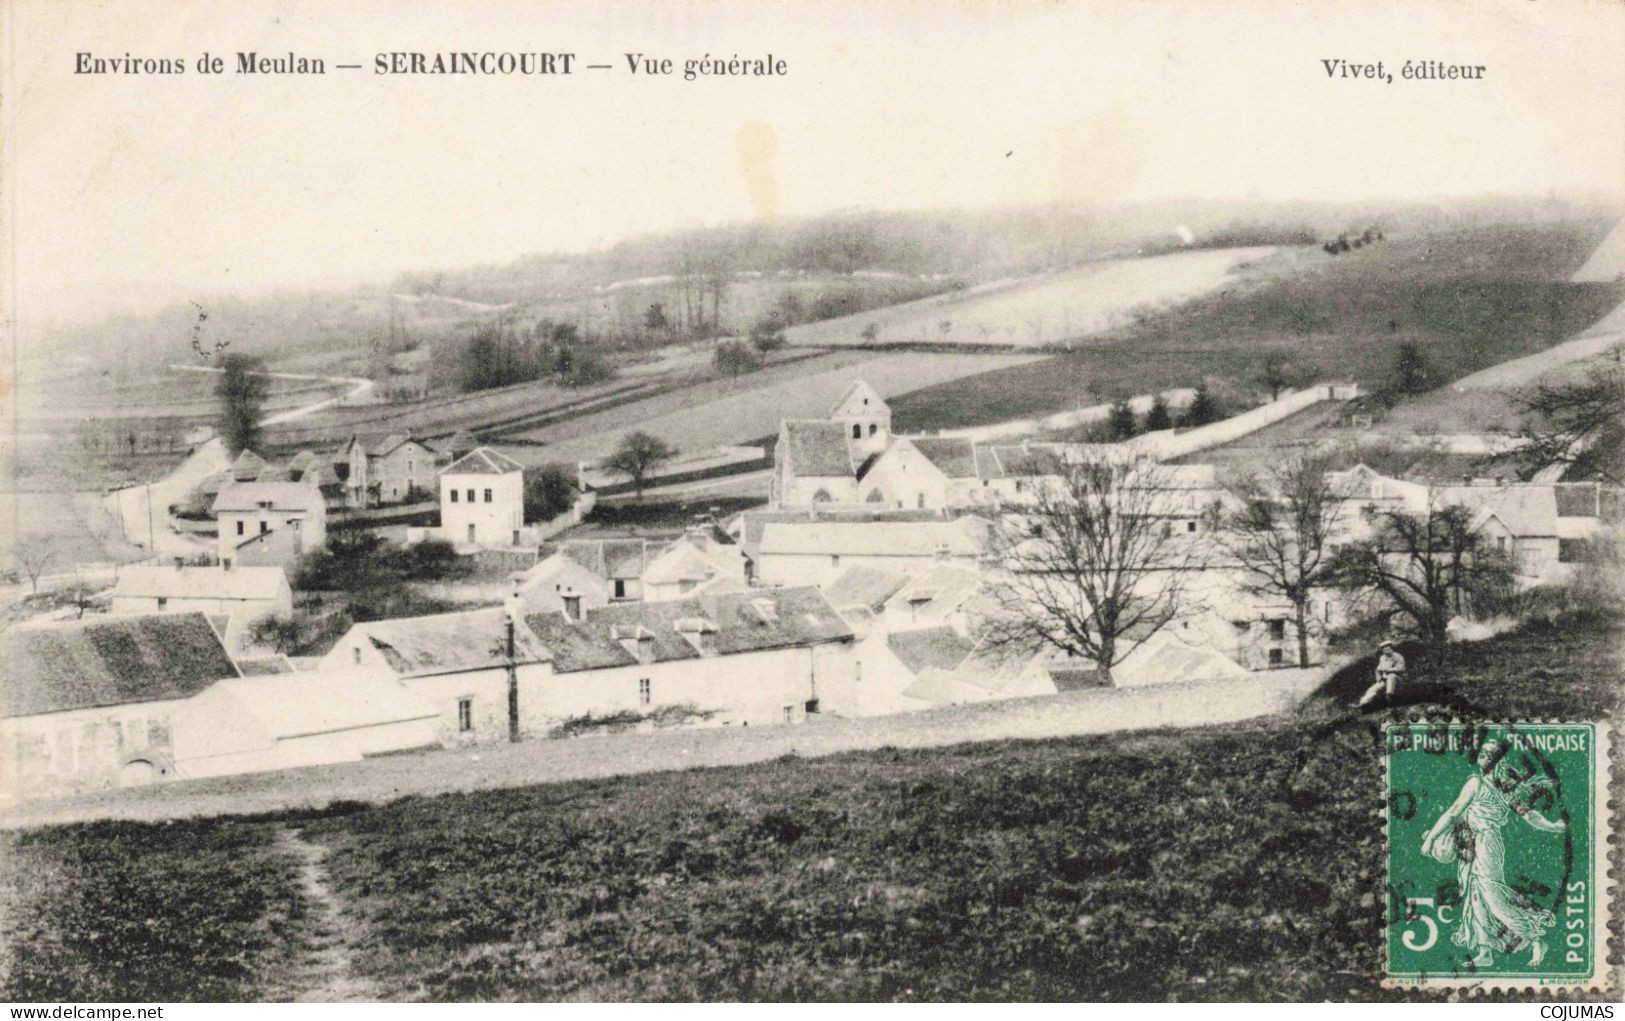 95 - SEREINCOURT - S20616 - Vue Générale - Environs De Meulan - Seraincourt